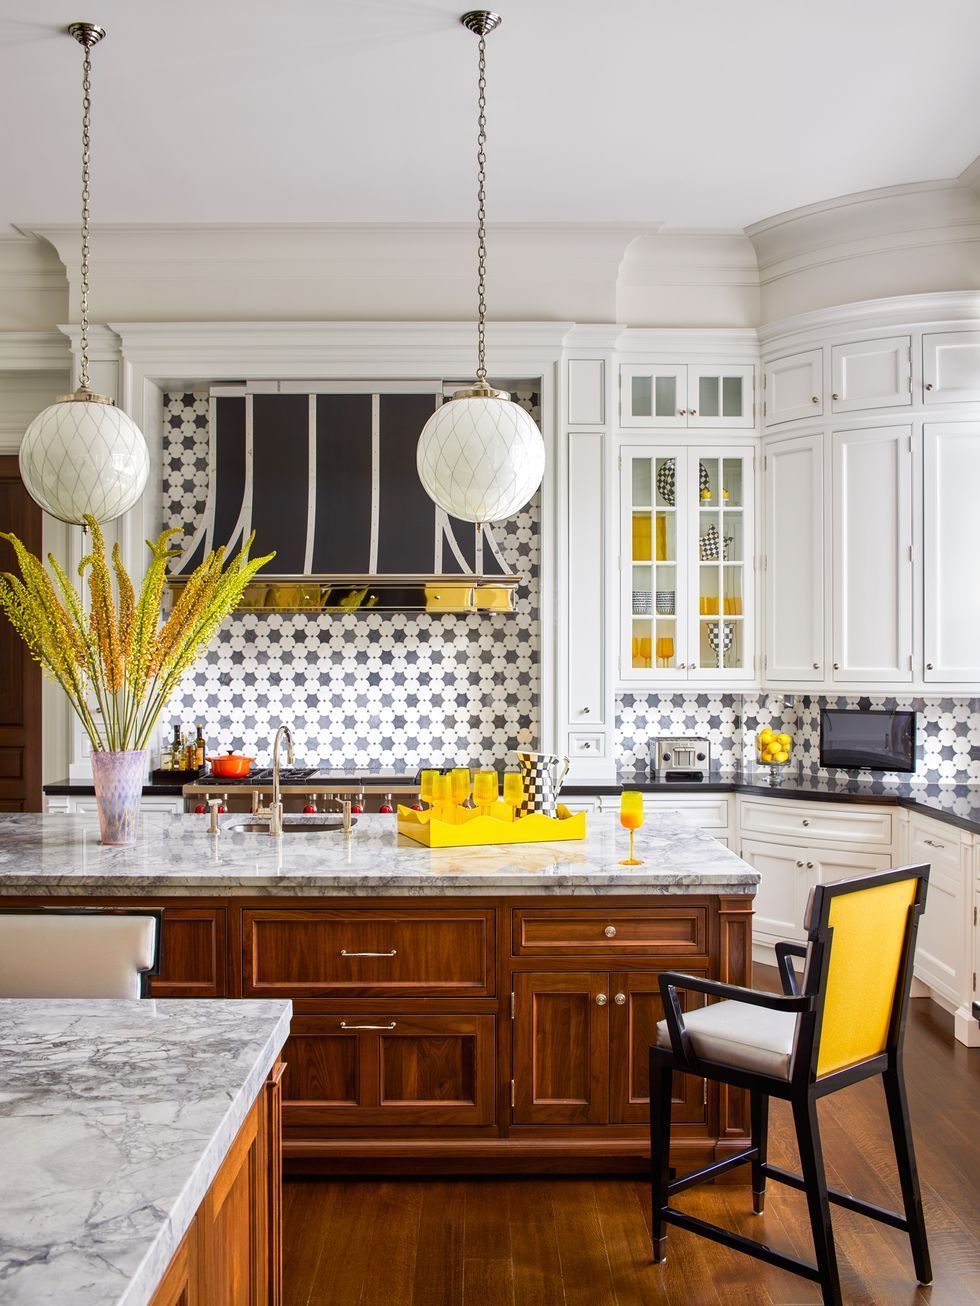 20 Gorgeous Kitchen Backsplash Ideas   Best Kitchen Tile Ideas